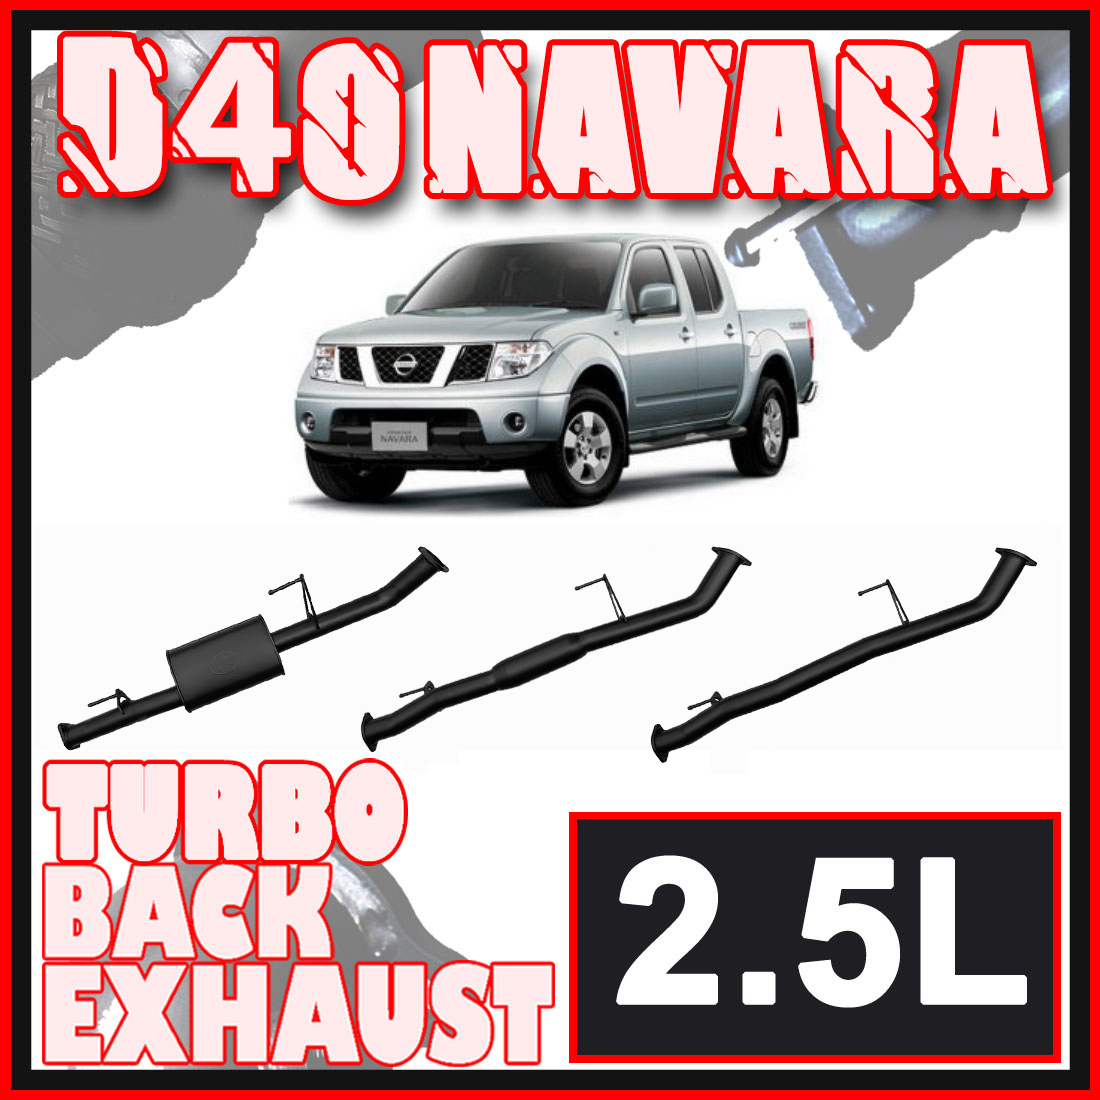 Nissan D40 Navara Exhaust 2.5L Manual Turbo Back 3" Systems image